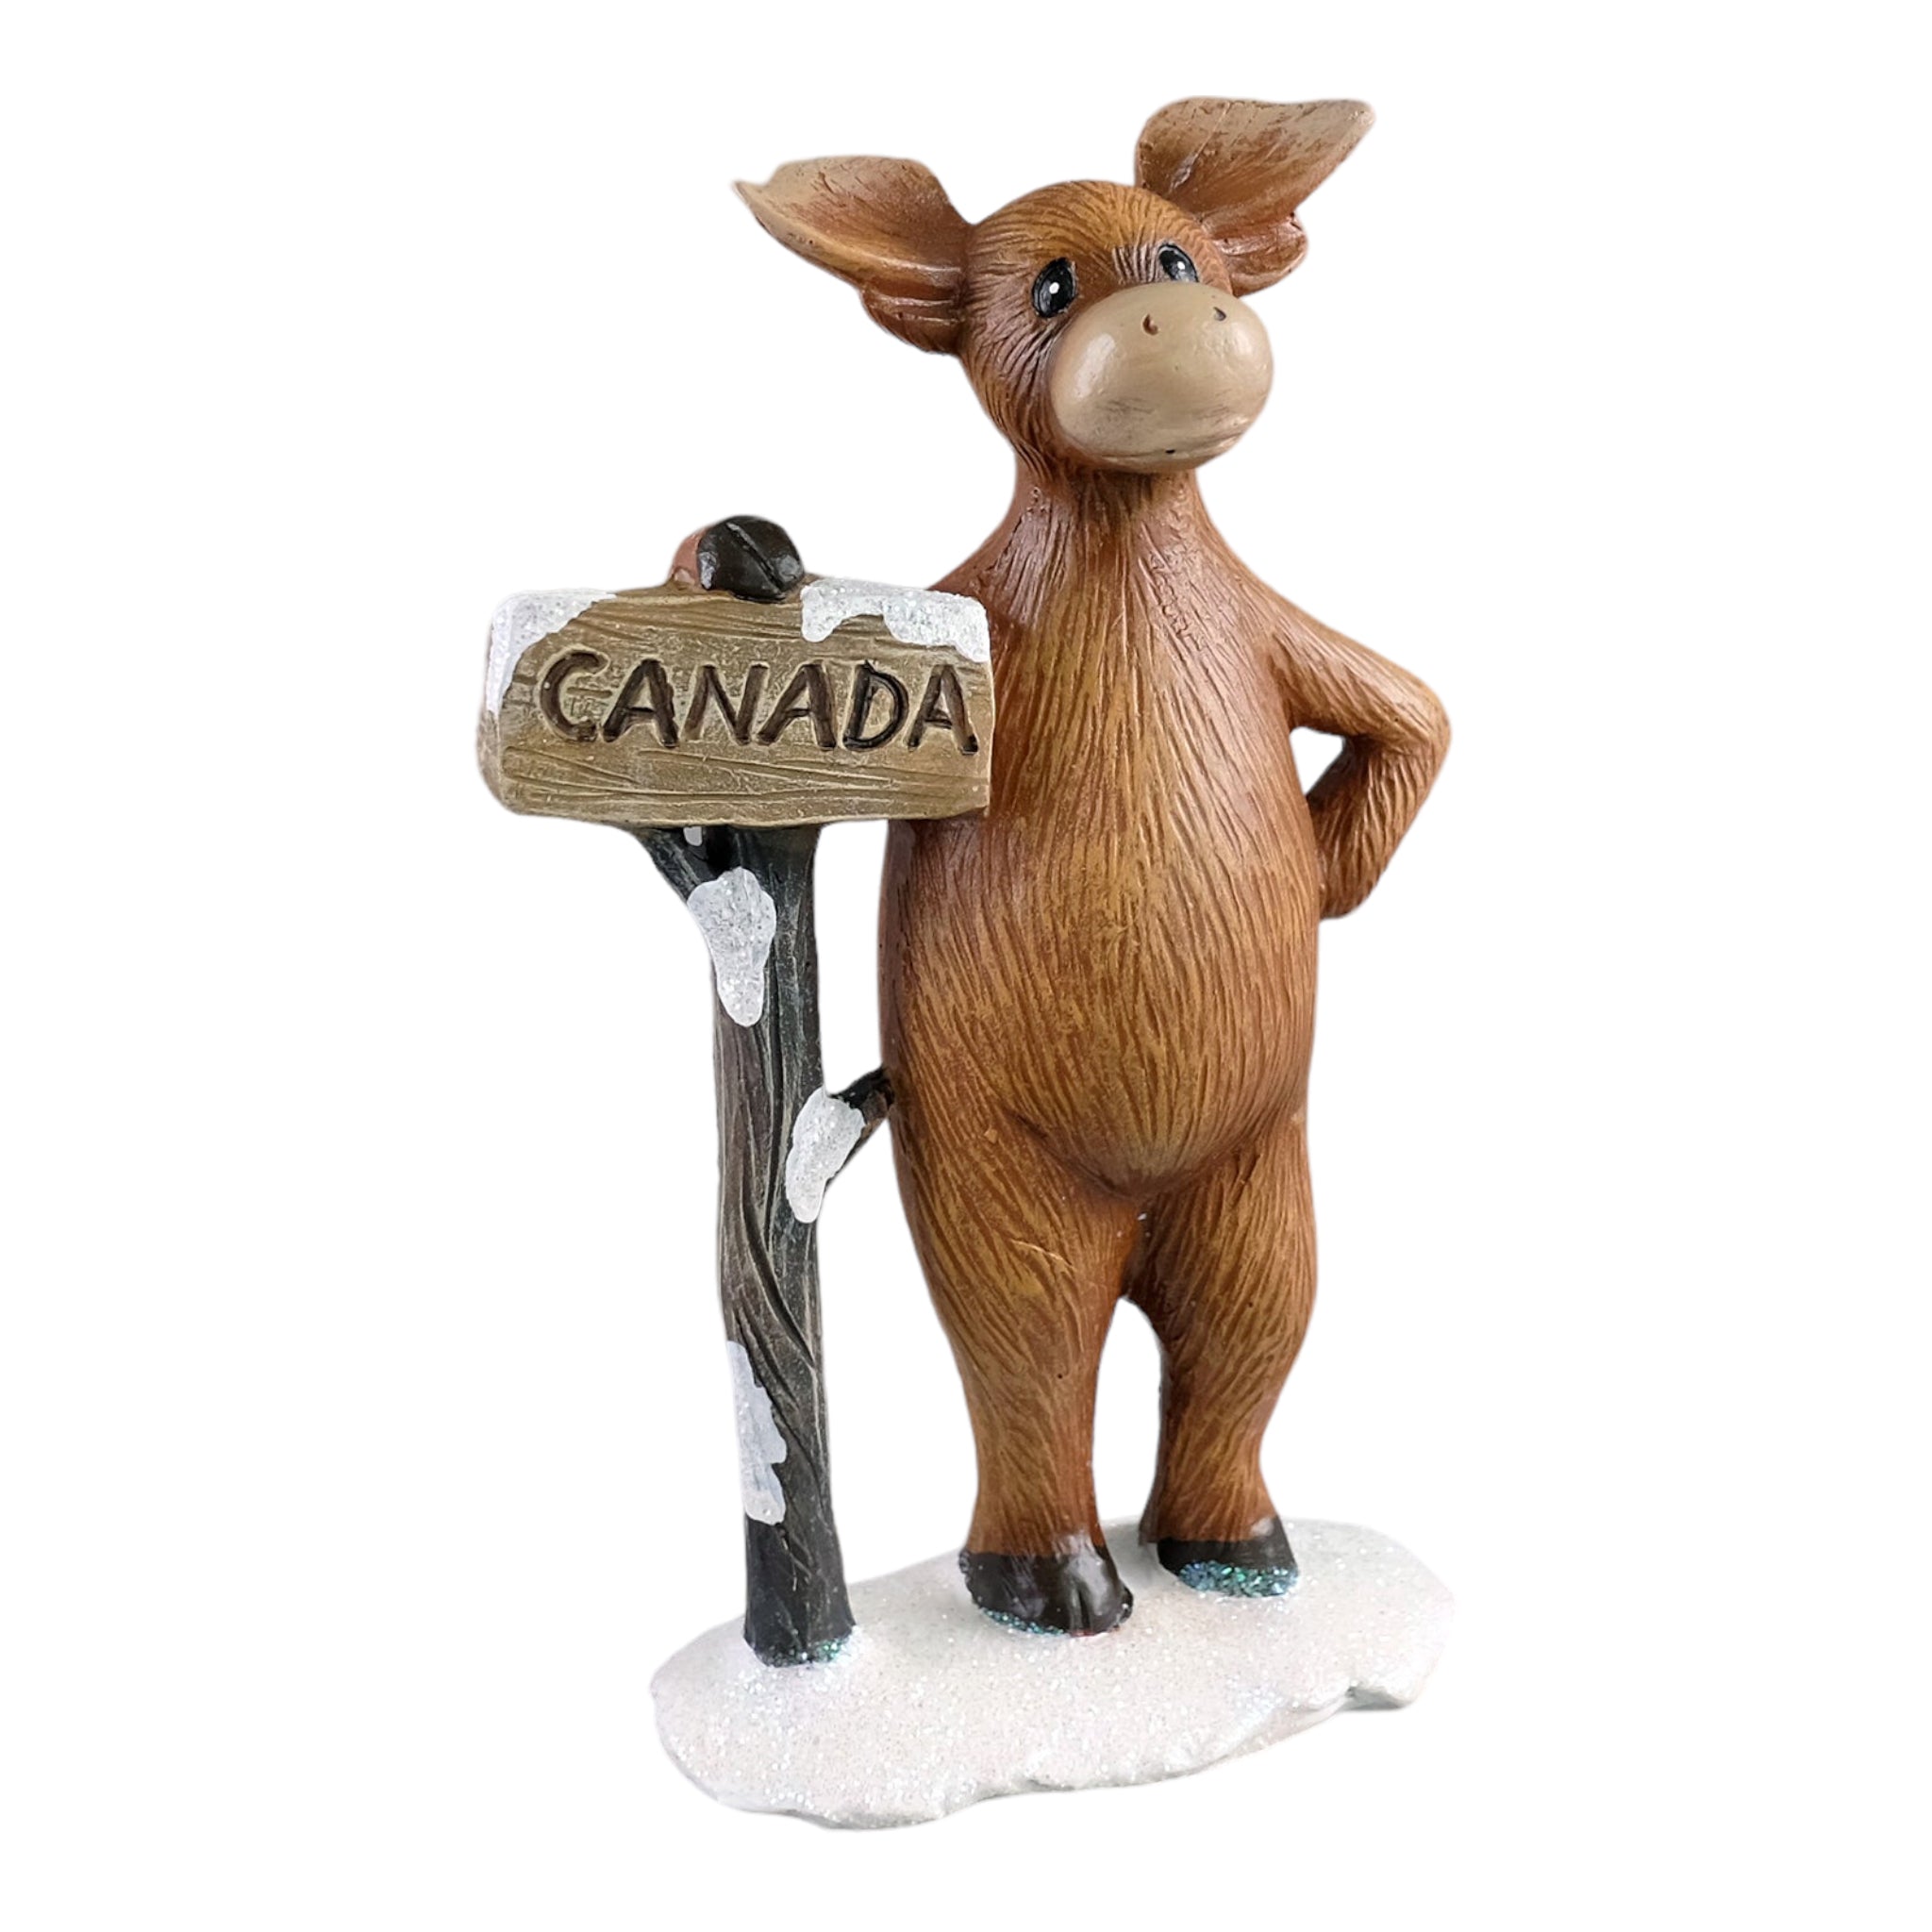 MOOSE STANDING CANADA SIGN FIGURE